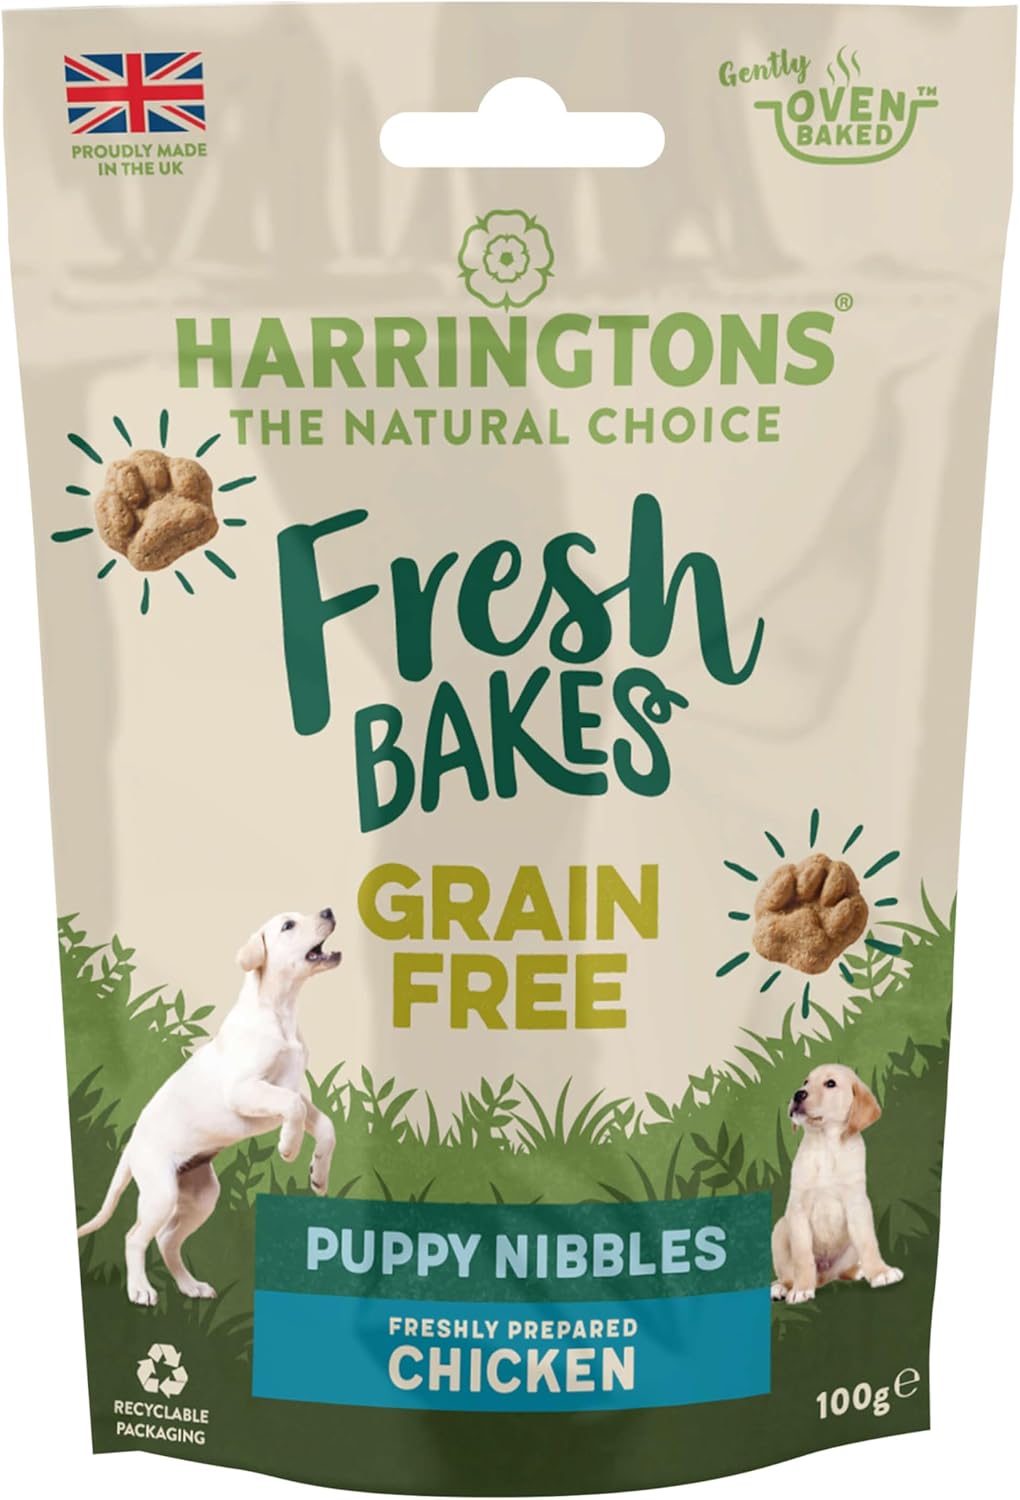 Harringtons Fresh Bakes Grain Free Chicken with Yogurt Puppy Nibbles Dog Treats 100g (Pack of 9) - Gently Oven Baked?HARRPT-C100